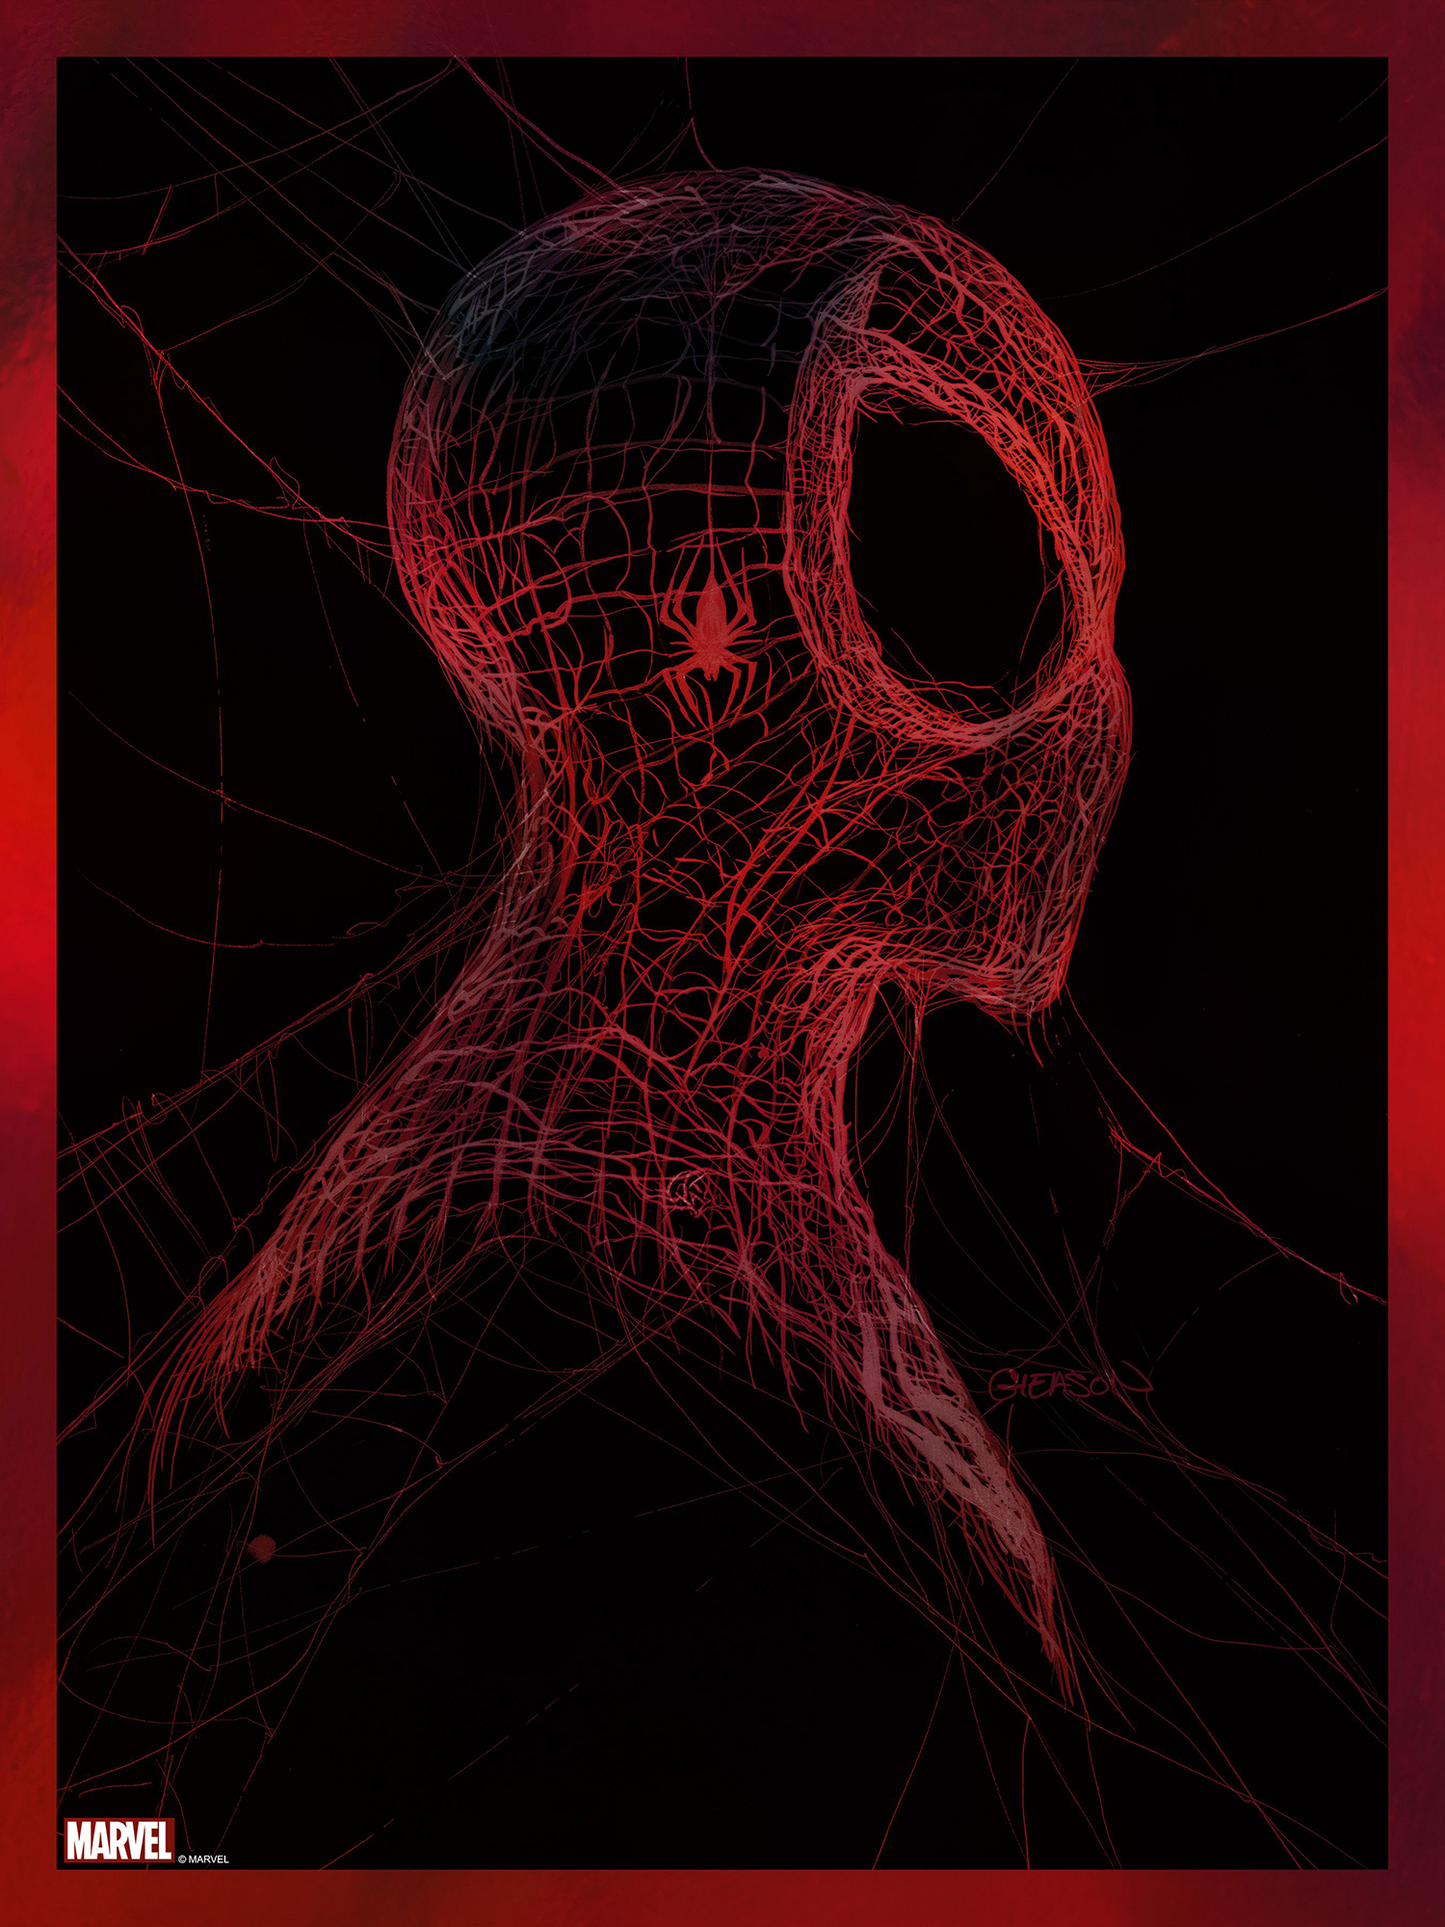 Patrick Gleason "Amazing Spider-Man #55" Red Foil Variant